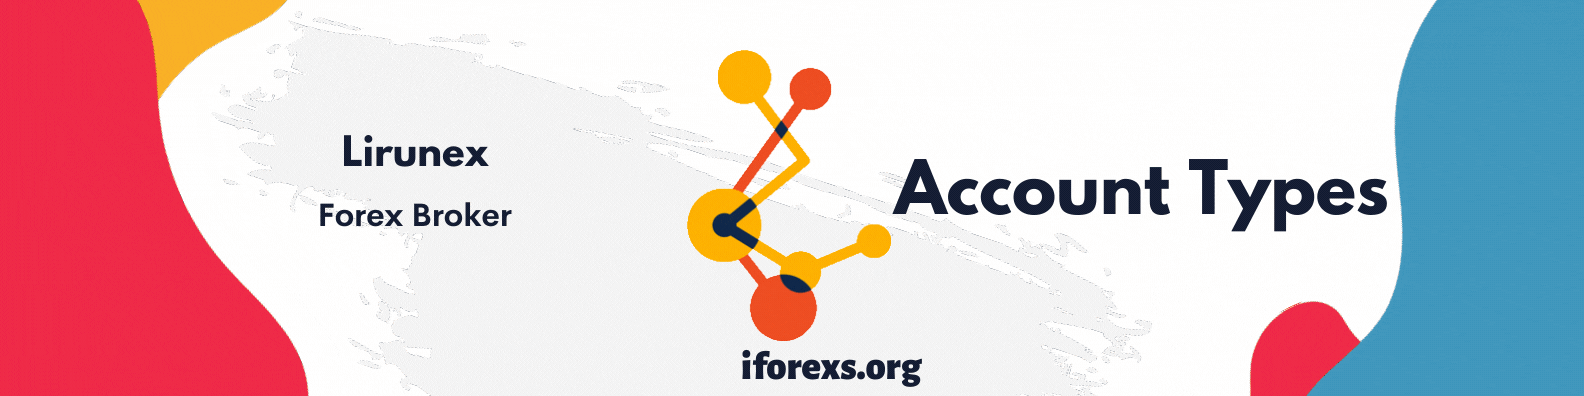 Lirunex Venue Account Types